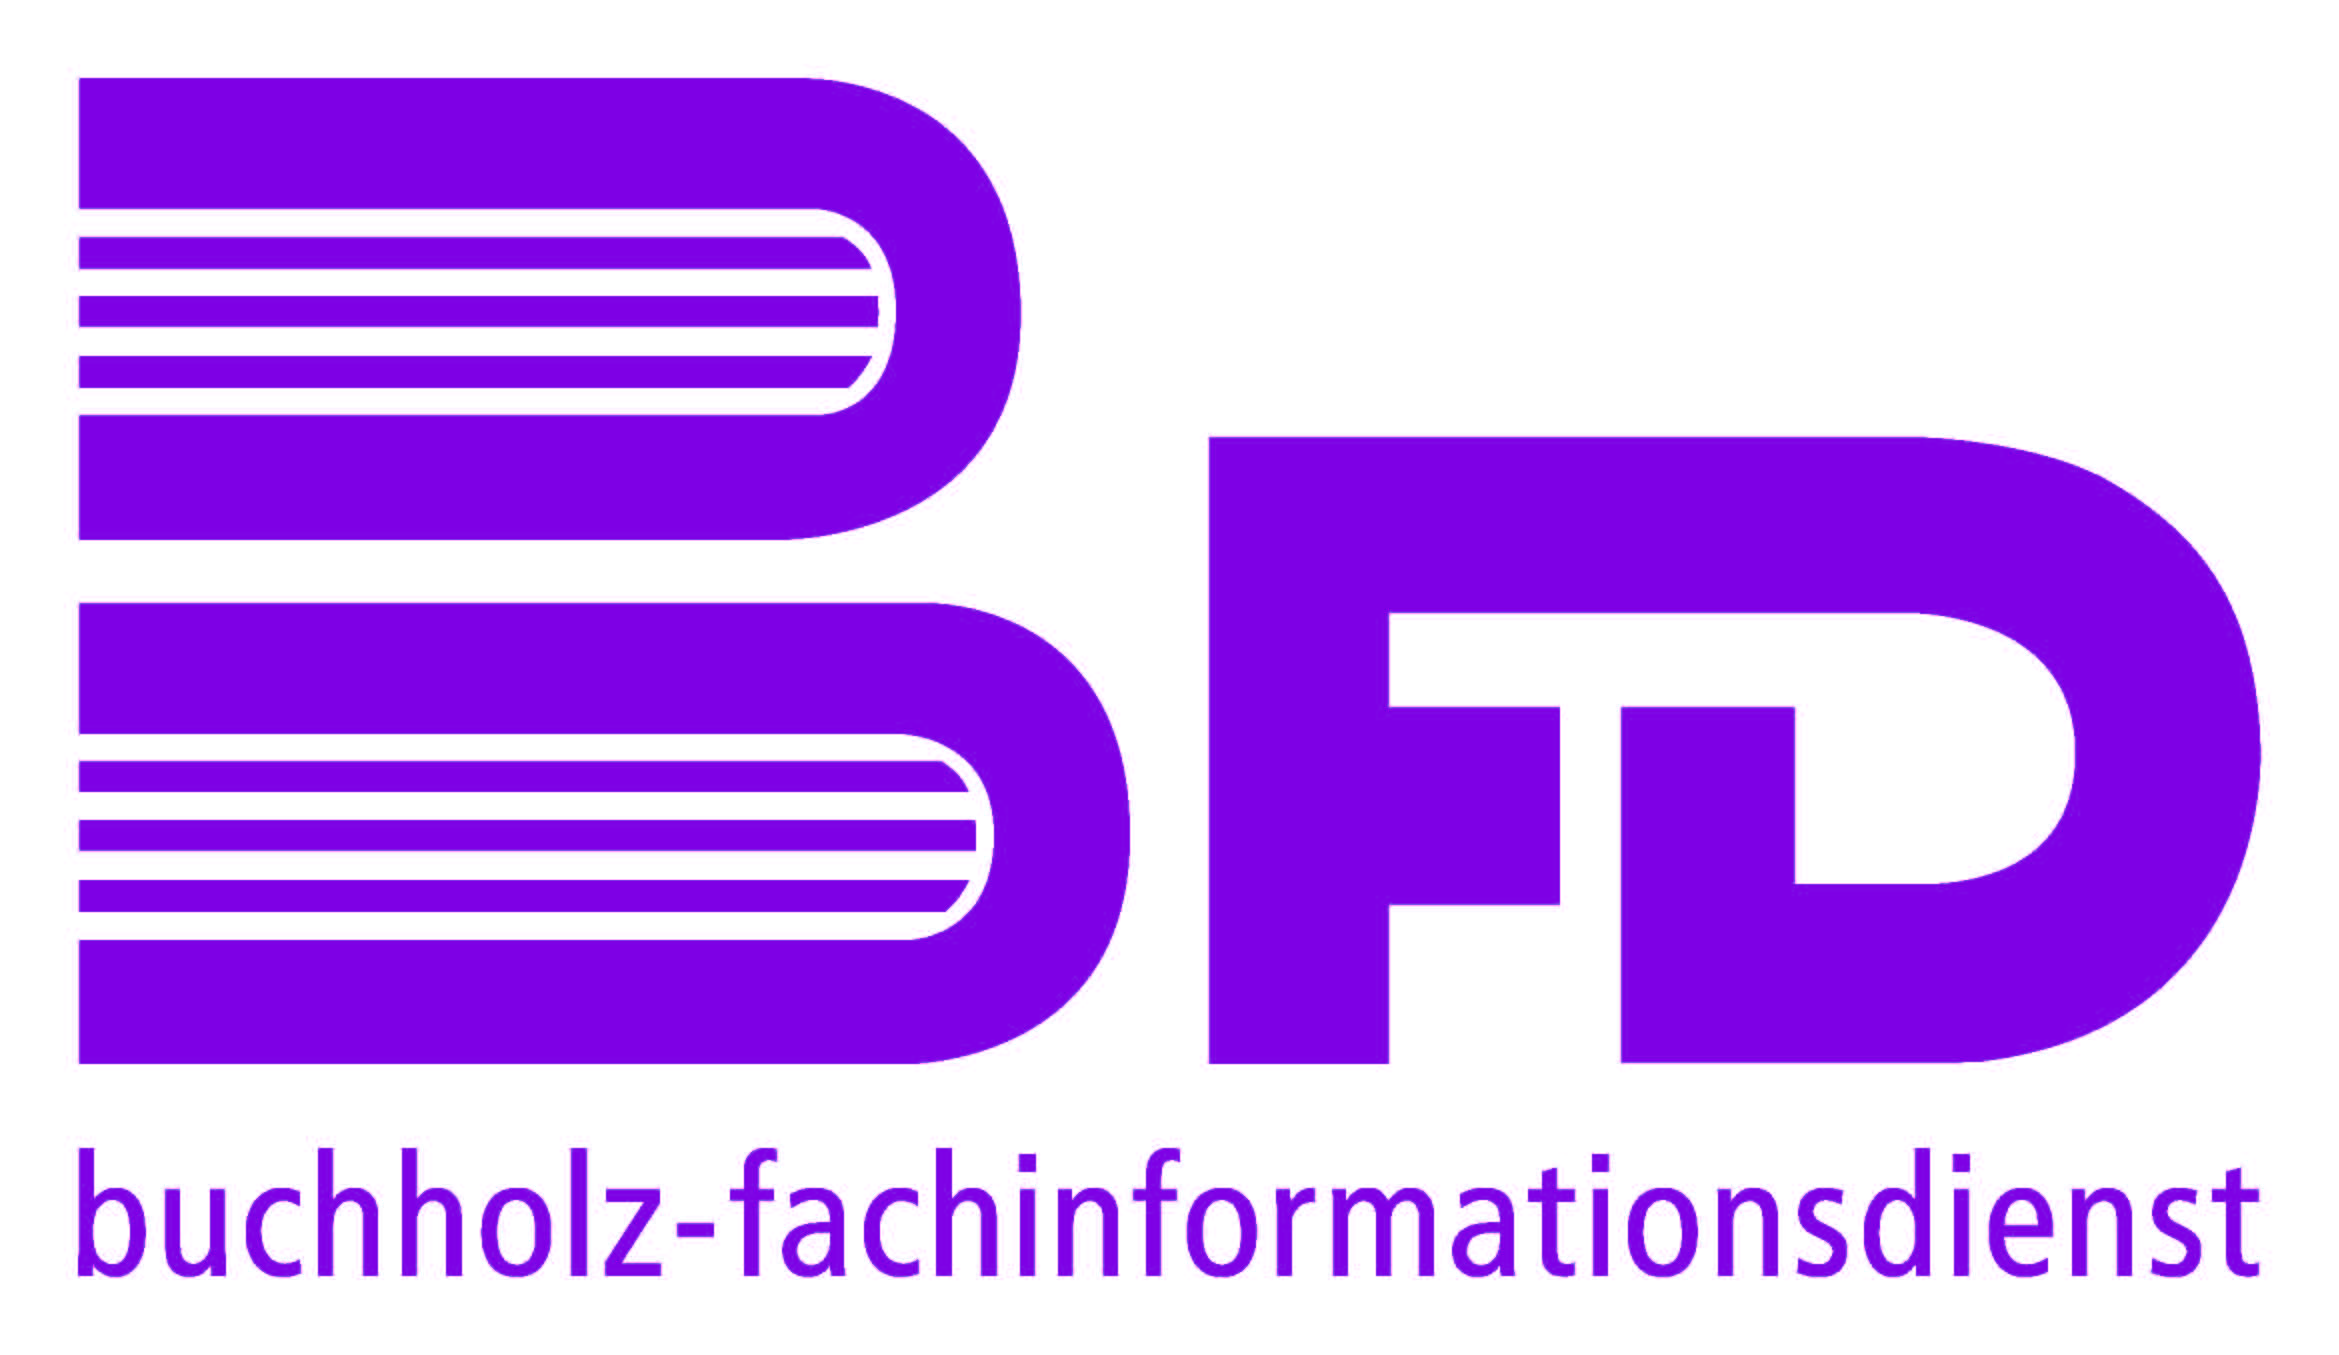 Bfd buchholz fachinformationsdienst